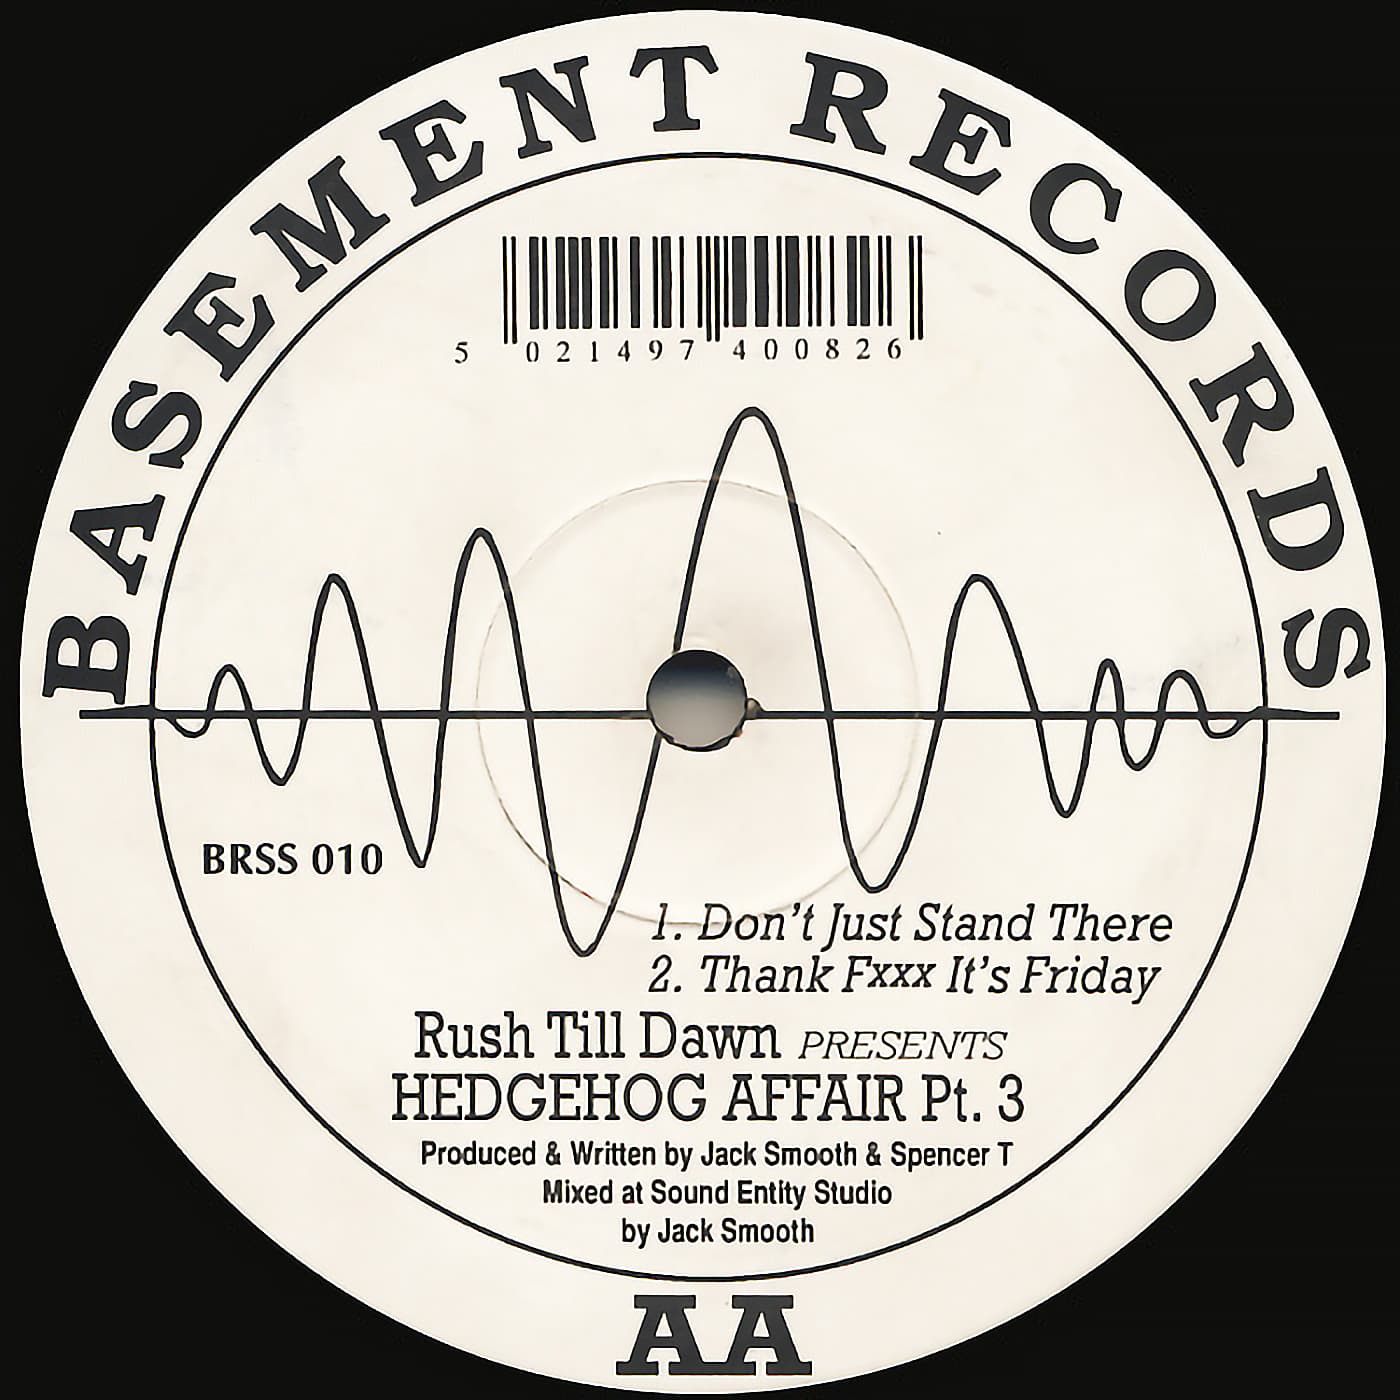 image cover: Hedgehog Affair - Rush Till Dawn Presents Hedgehog Affair Pt. 3 / Basement Records